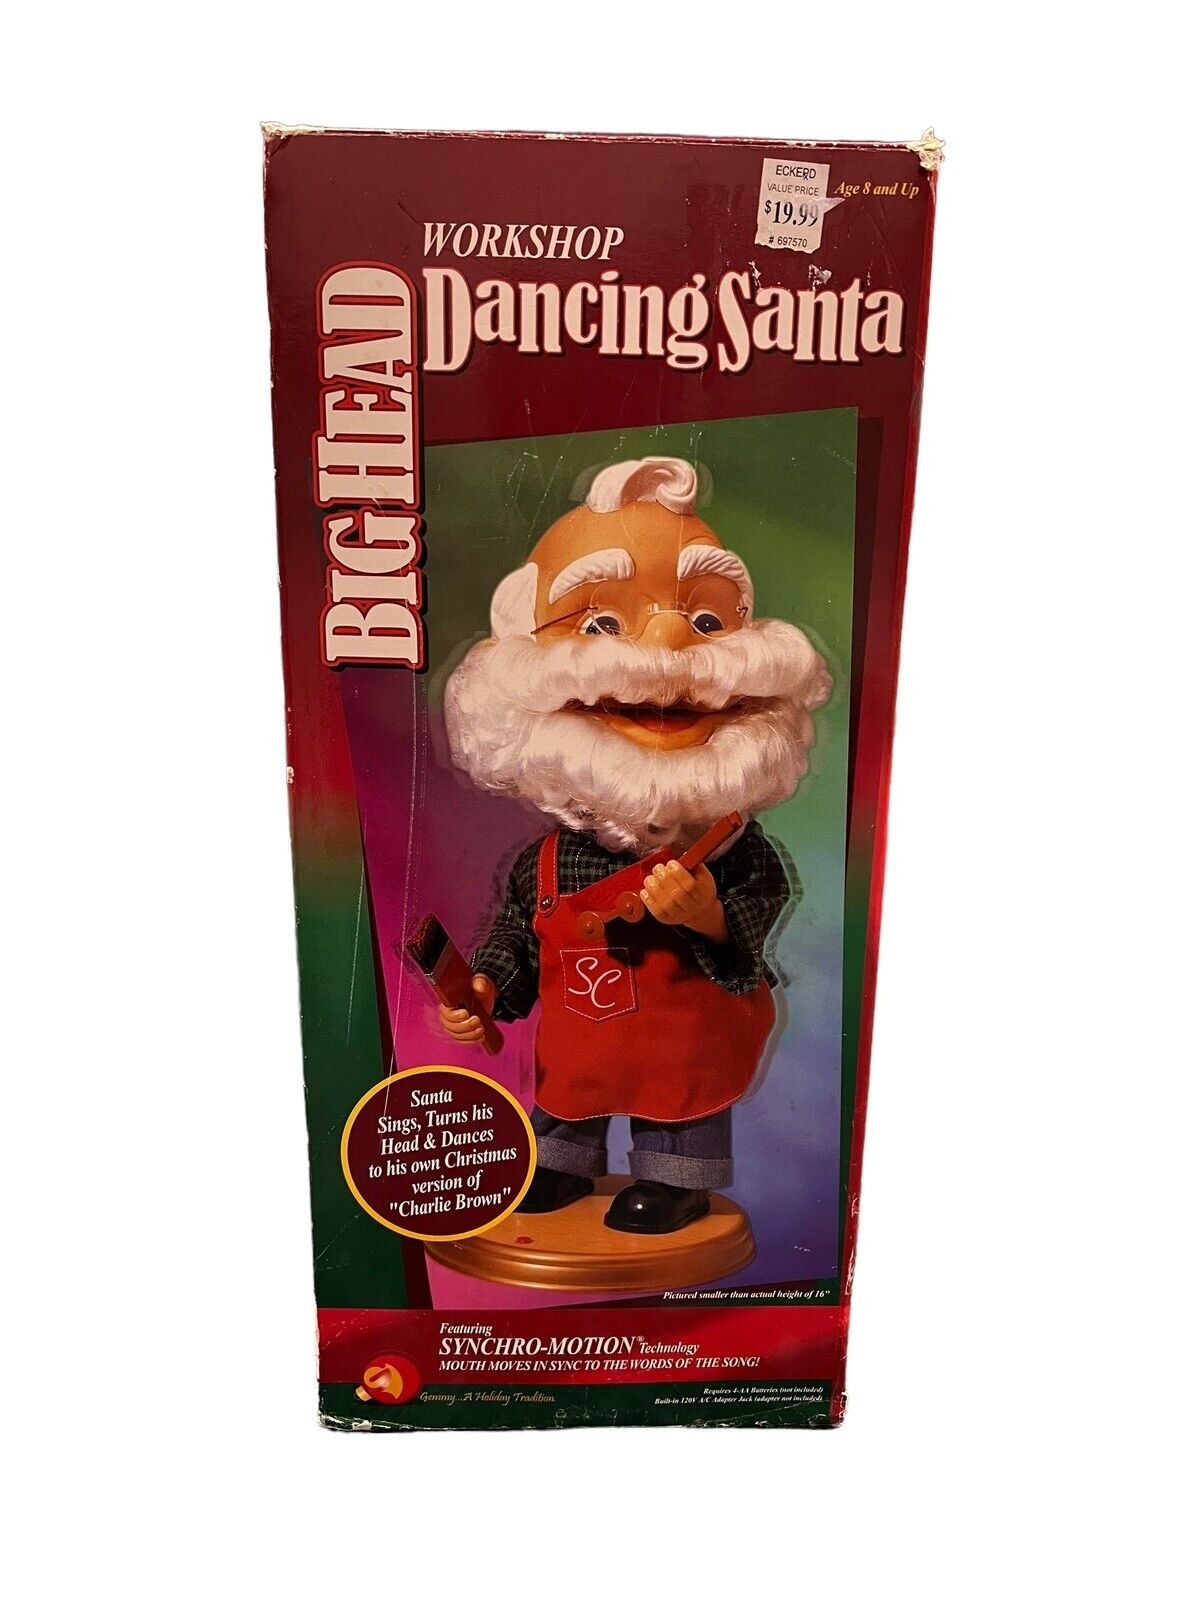 Big Head Dancing Santa Claus Gemmy Industries 2001    Brand New In Box